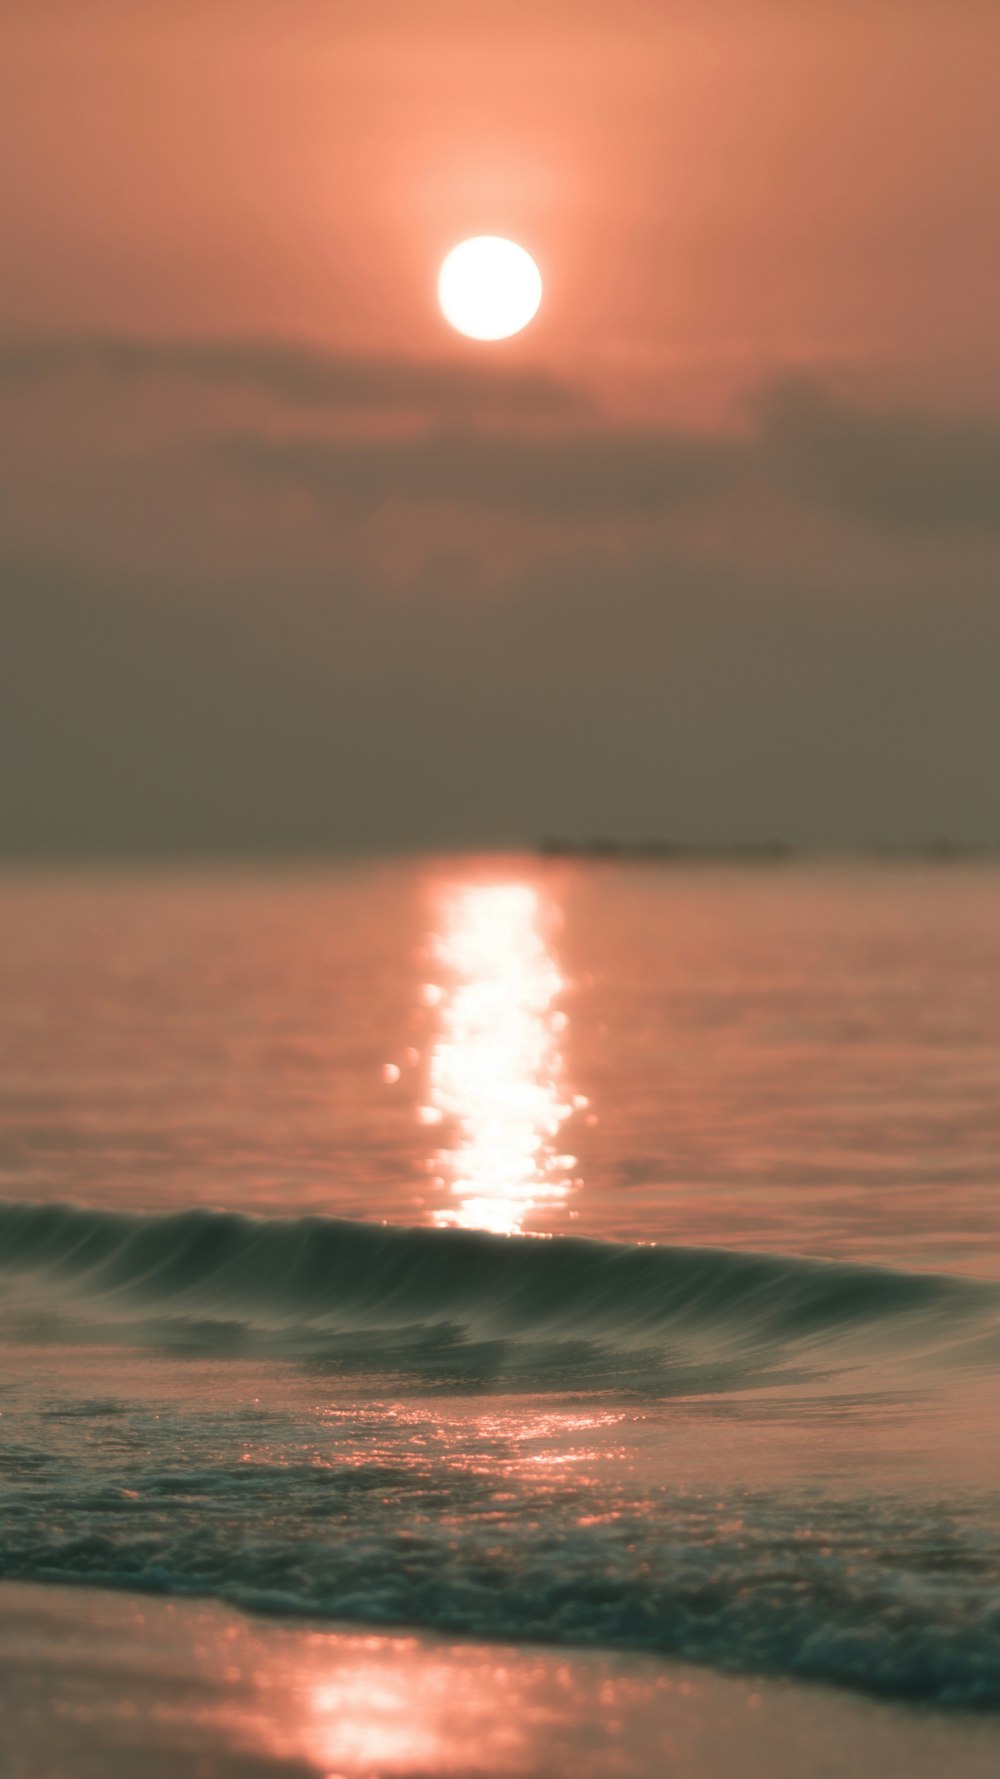 ocean waves under gray sky during sunset